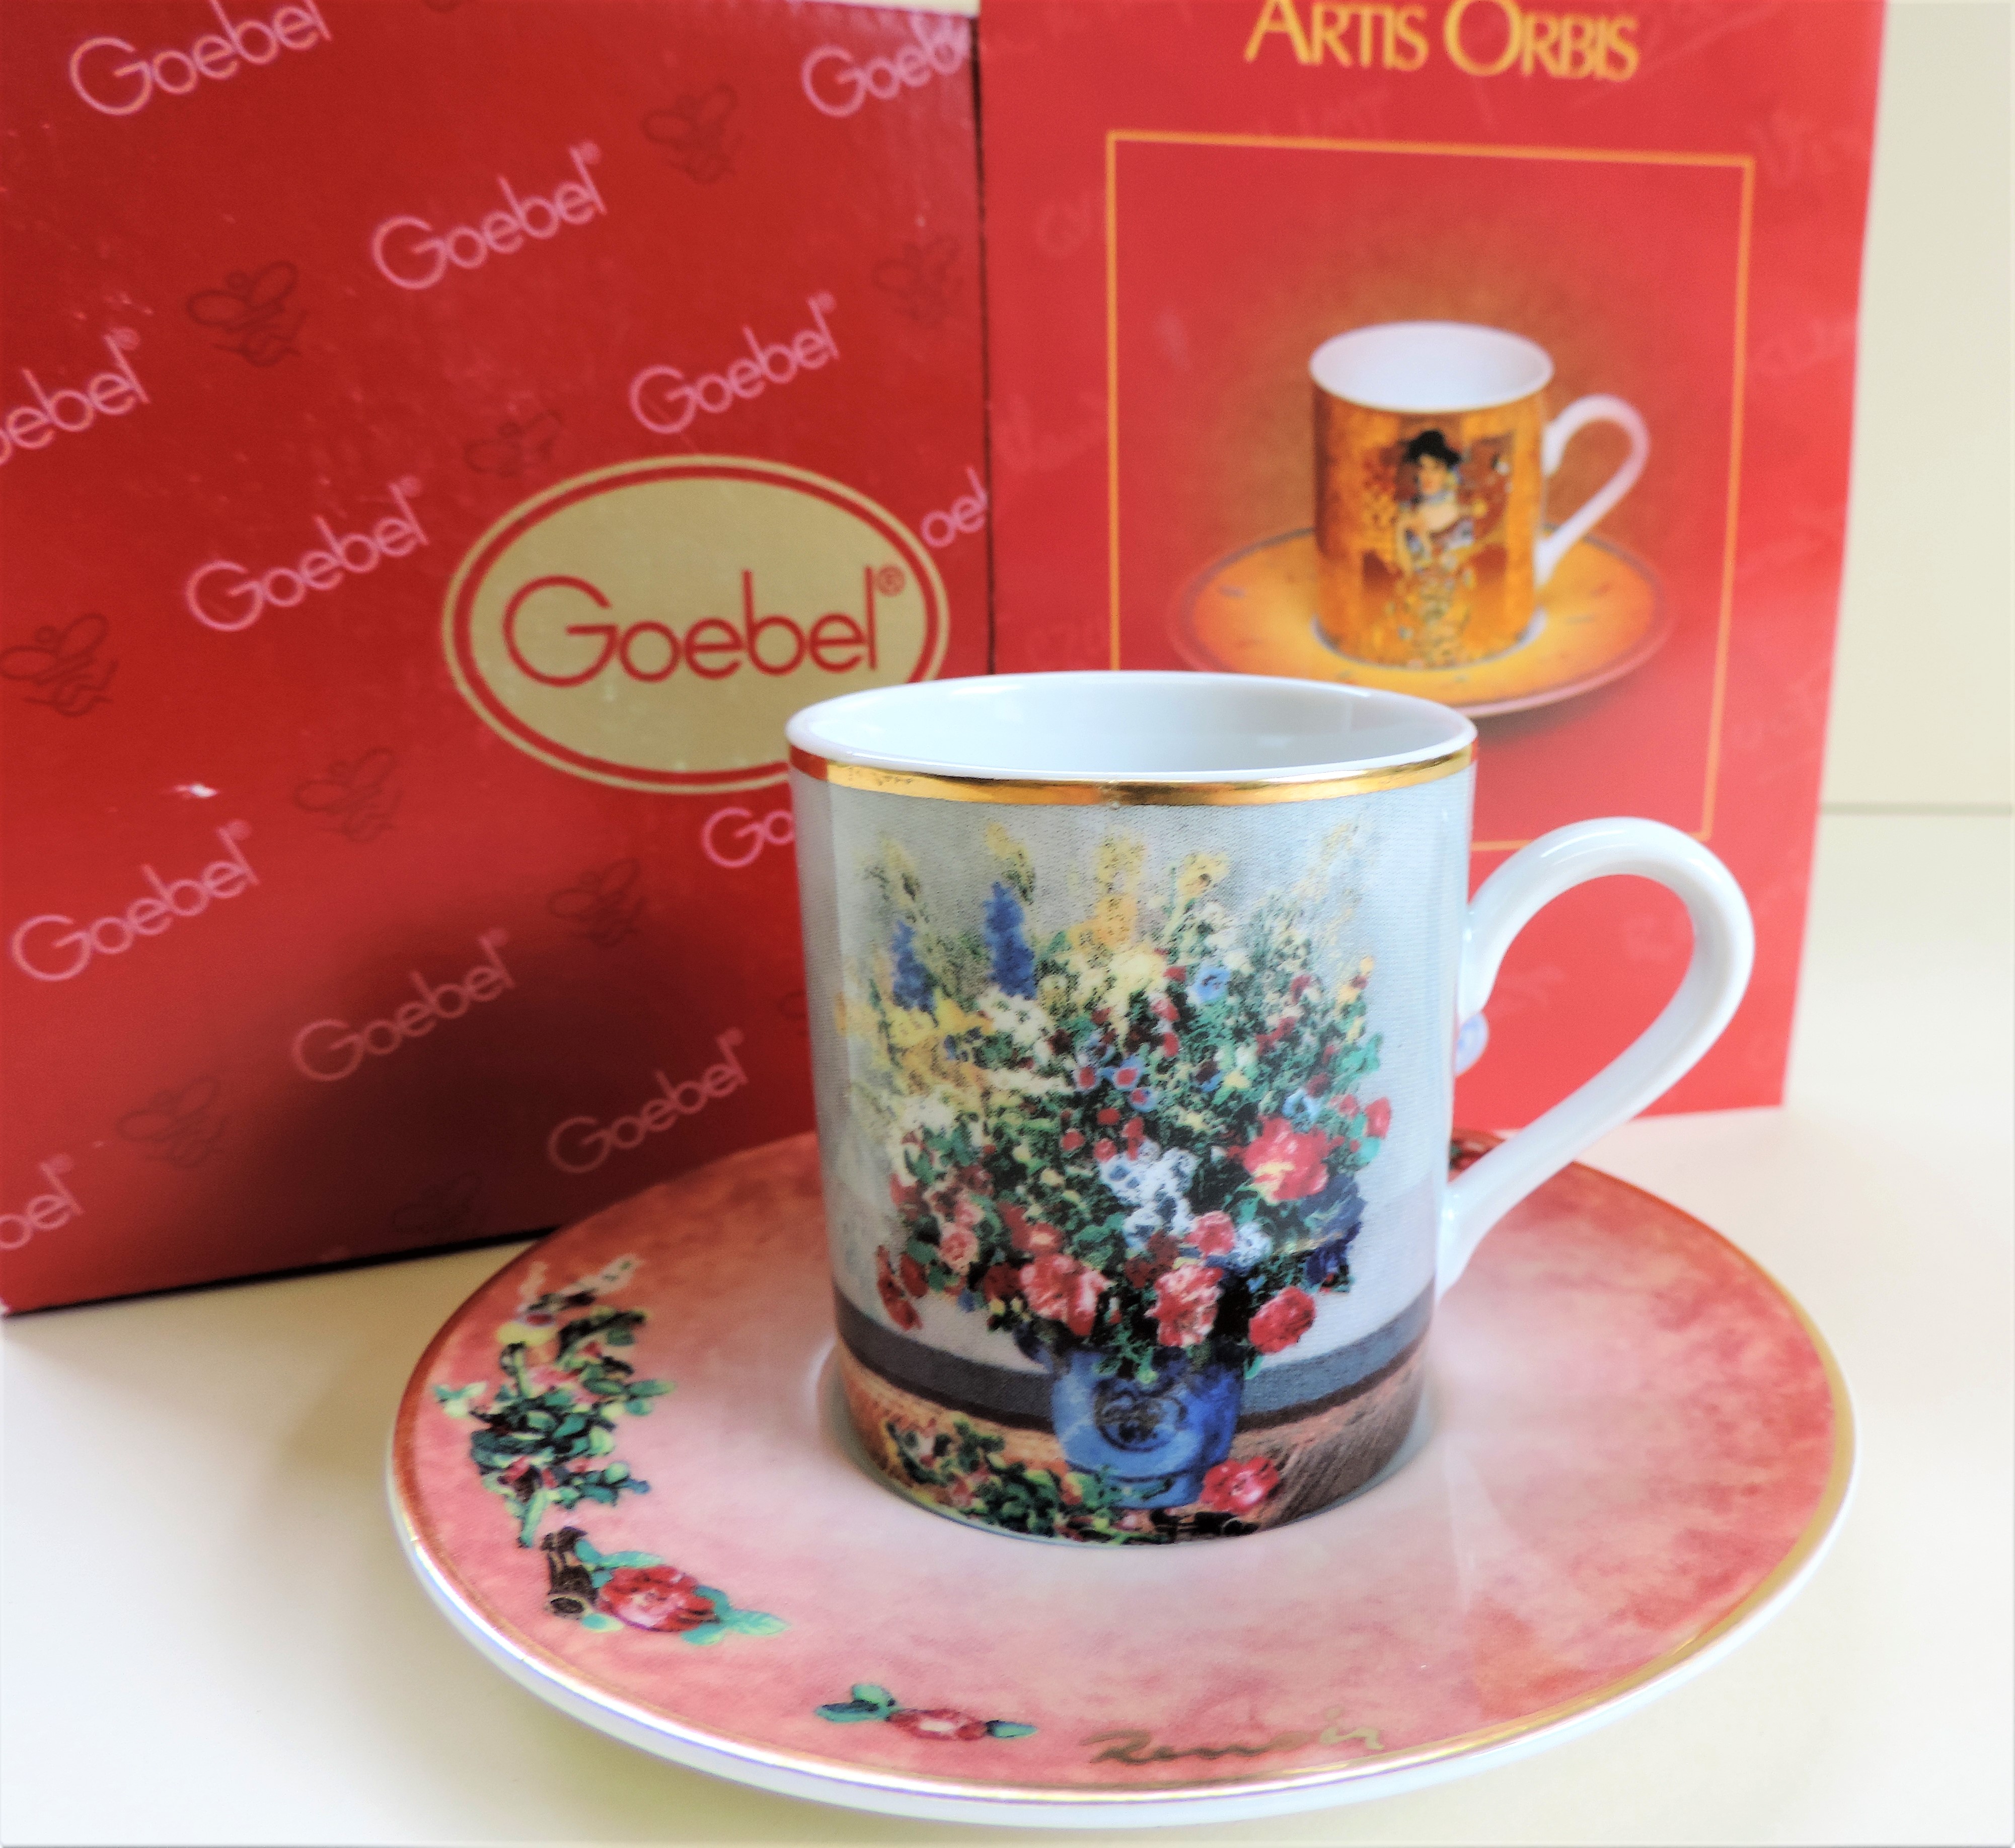 Goebel Artis Orbis Pierre Auguste Renoir Demitasse Expresso Cup & Saucer - Image 4 of 5